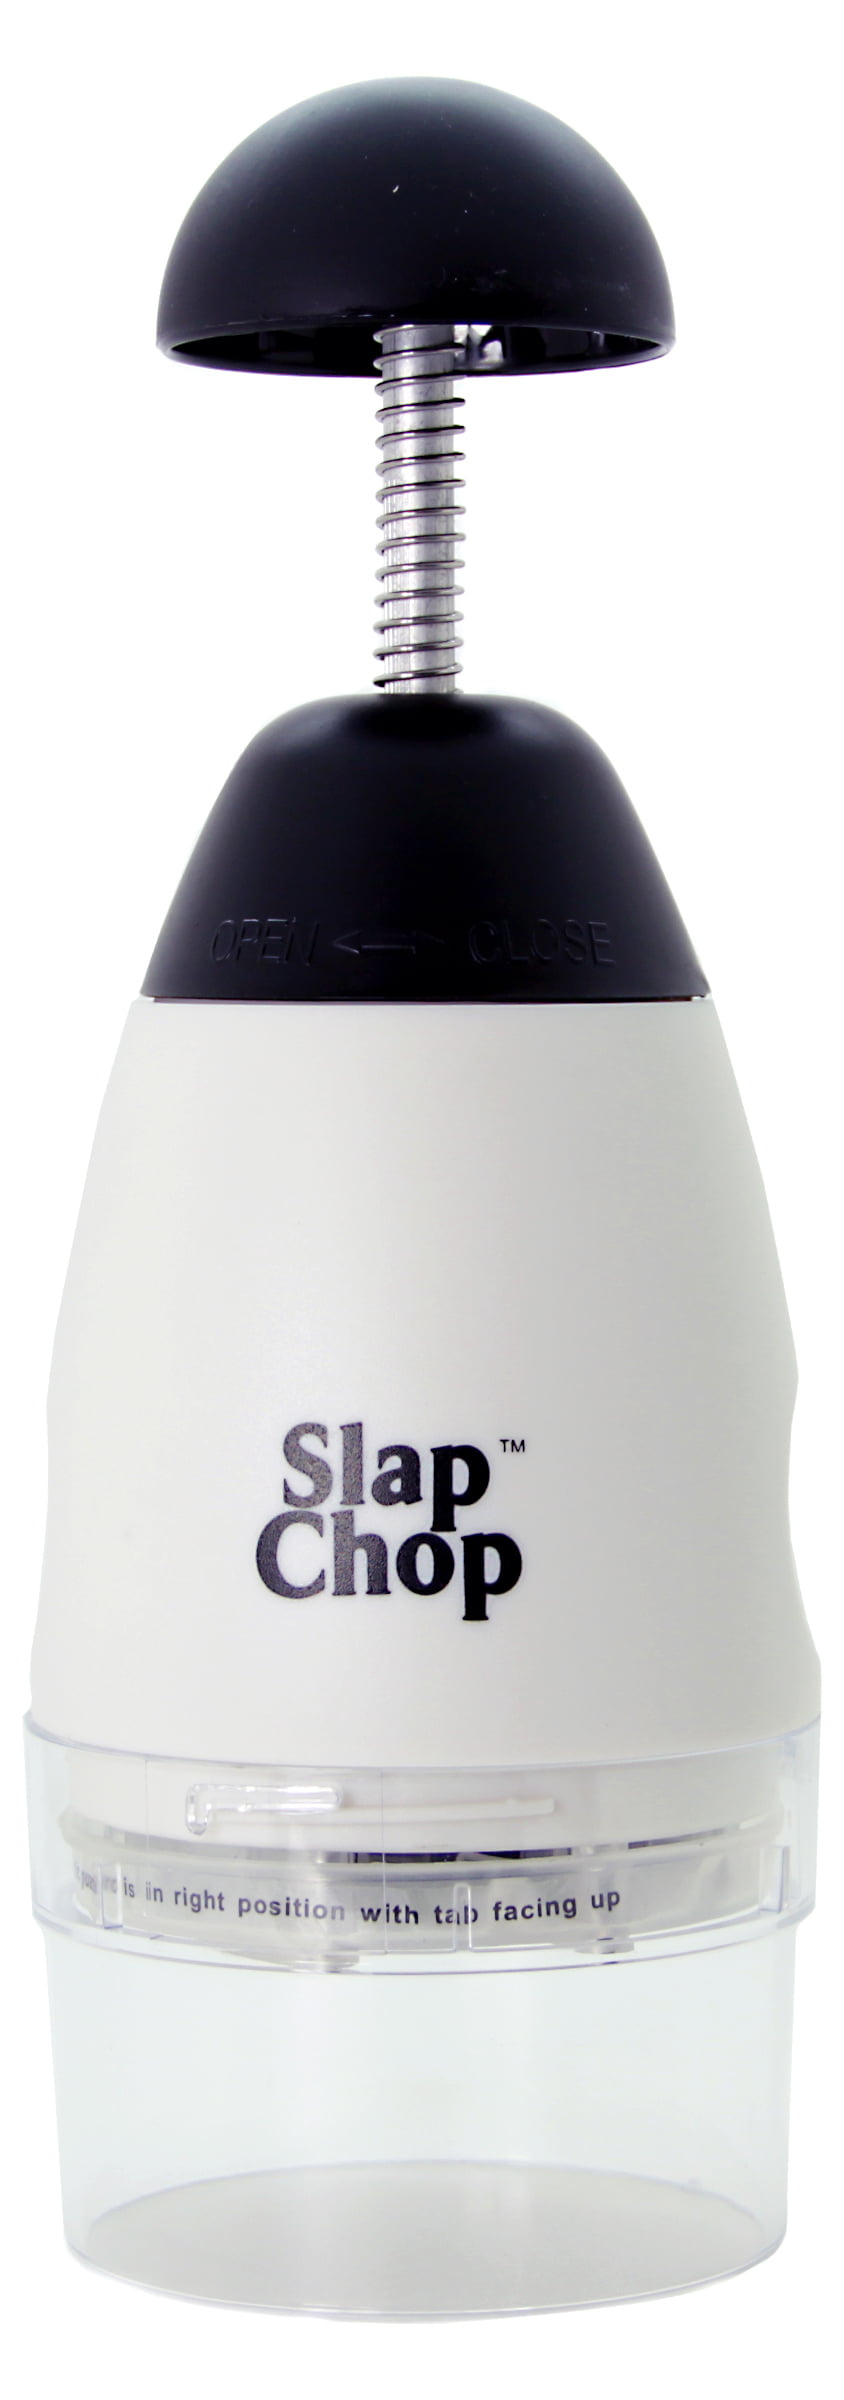 Original Slap Chop Multi Chopper Slicer with Stainless Steel Blades |  Vegetable Chopper Gadget | Mini Chopper for Salads | Kitchen Accessory